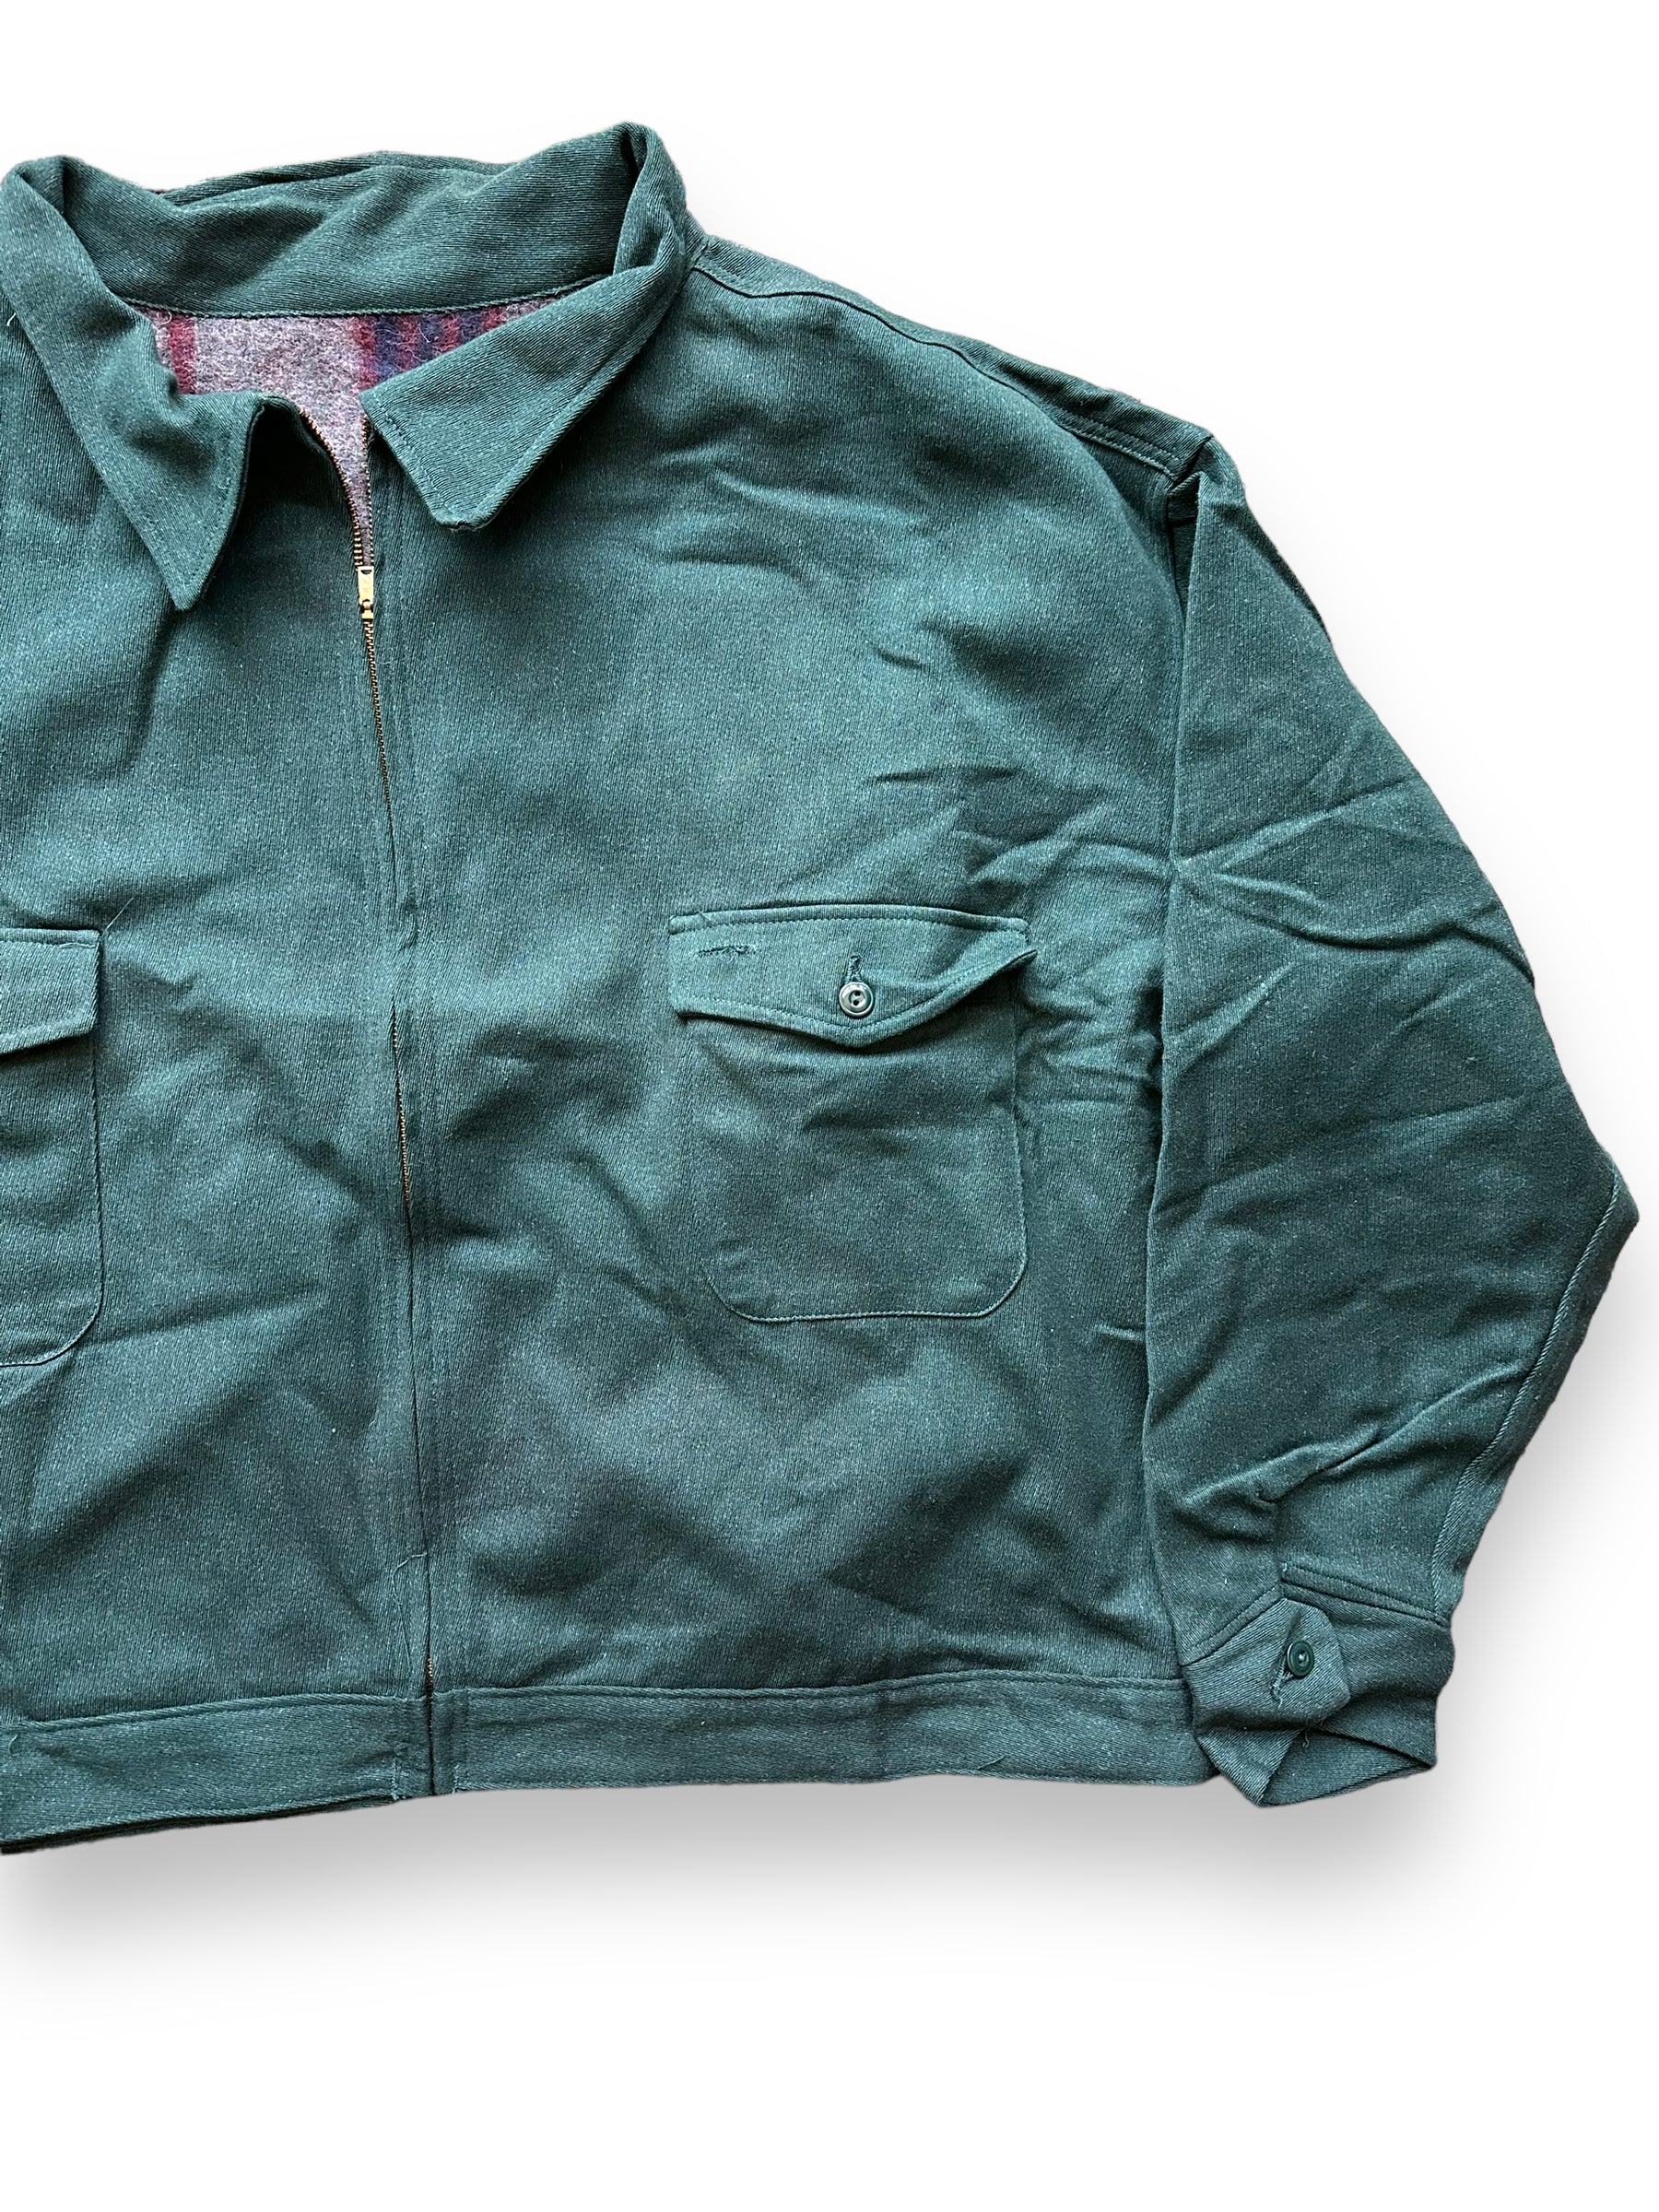 Front Left View of Vintage Green Blanket Lined Gas Station Jacket SZ 56 | Vintage Workwear Jacket Seattle | Seattle Vintage Clothing